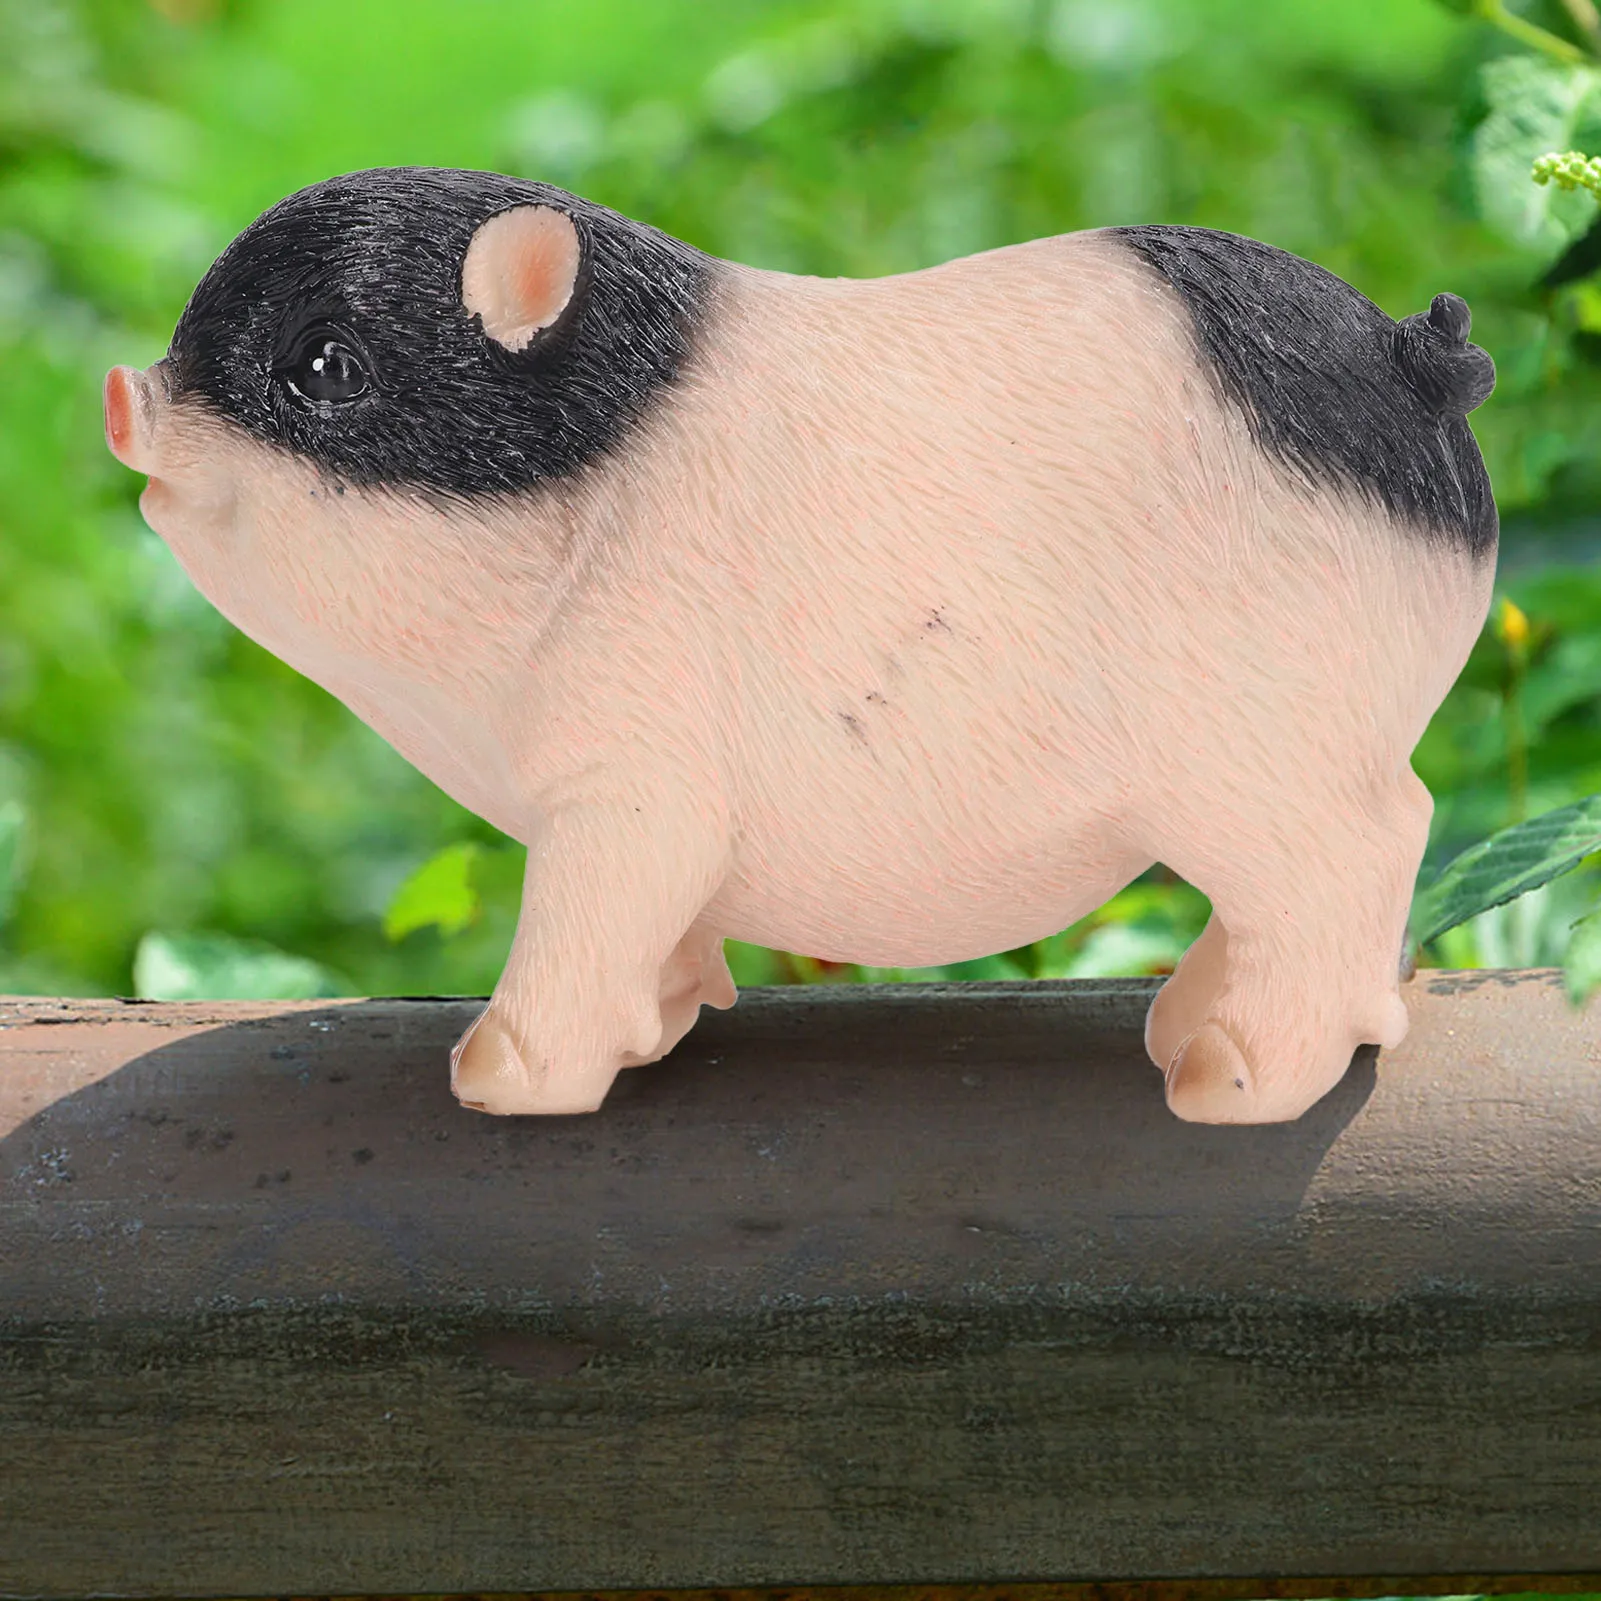 

Cute Pig Garden Statue Resin Animals Figurine Outdoor Sculpture Resin Lawn Ornament Mini Pink Black Pig